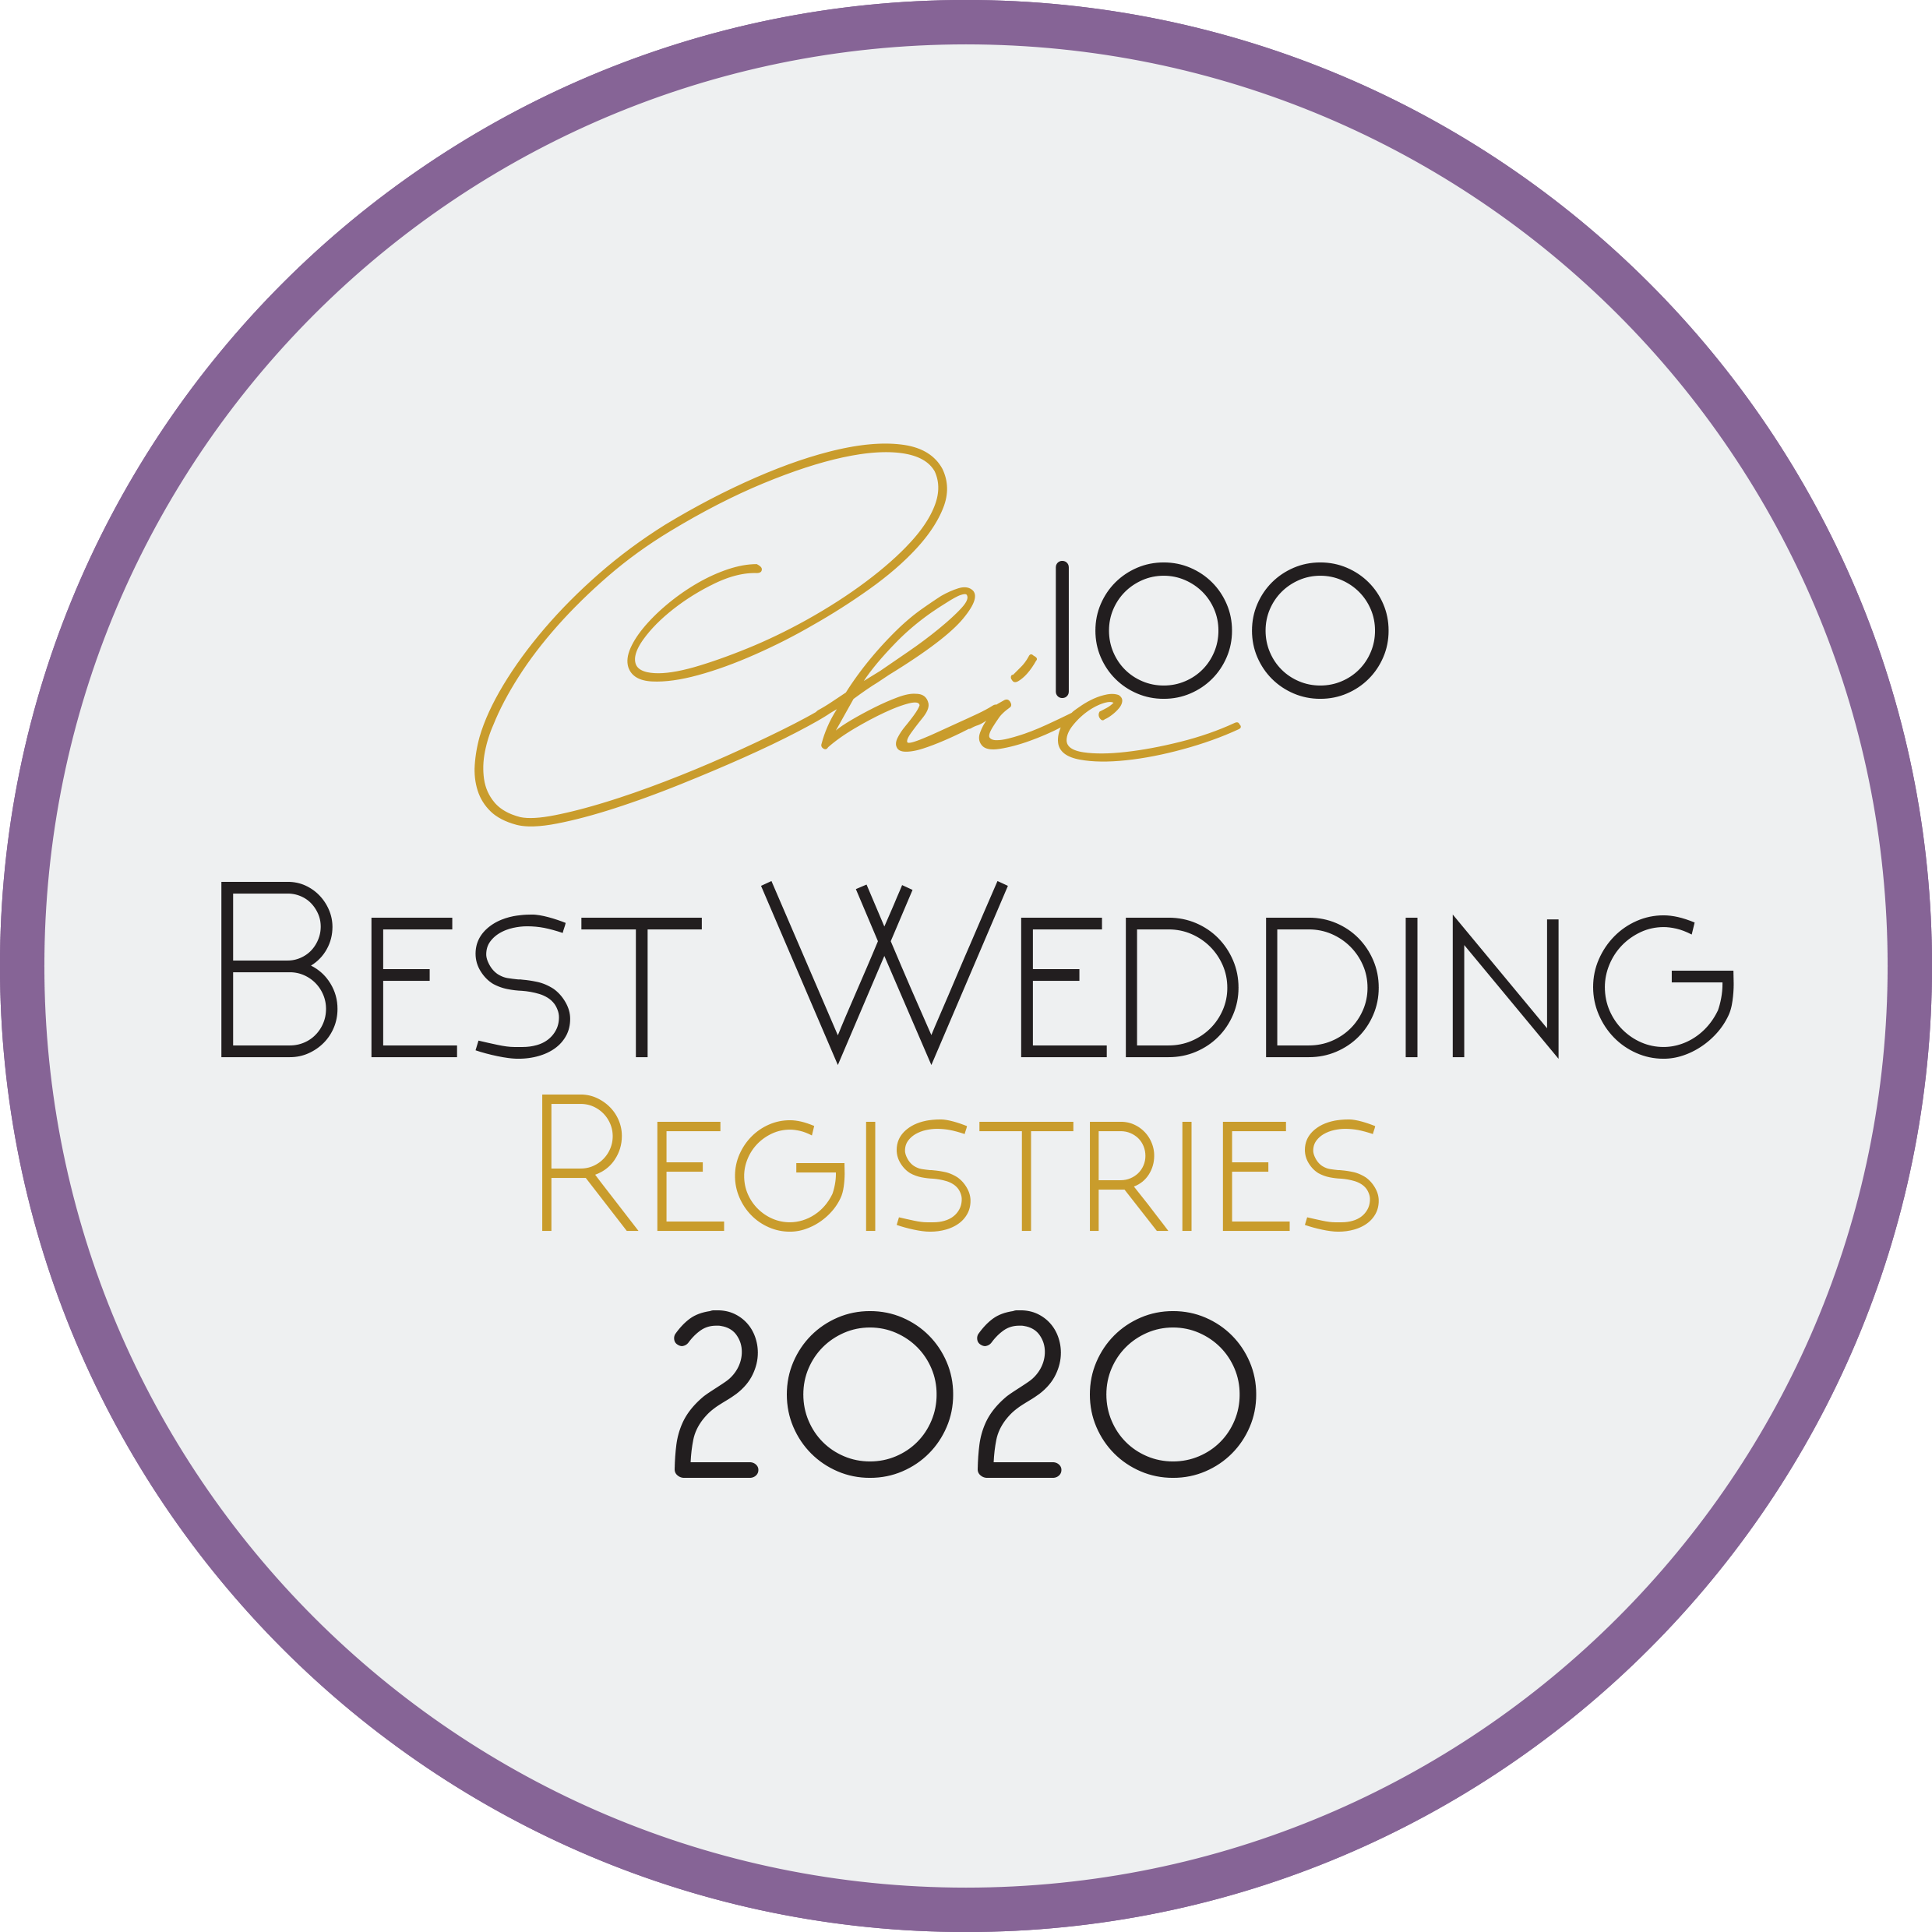 Complete Wedding Registry Checklist - Walking in Memphis in High Heels